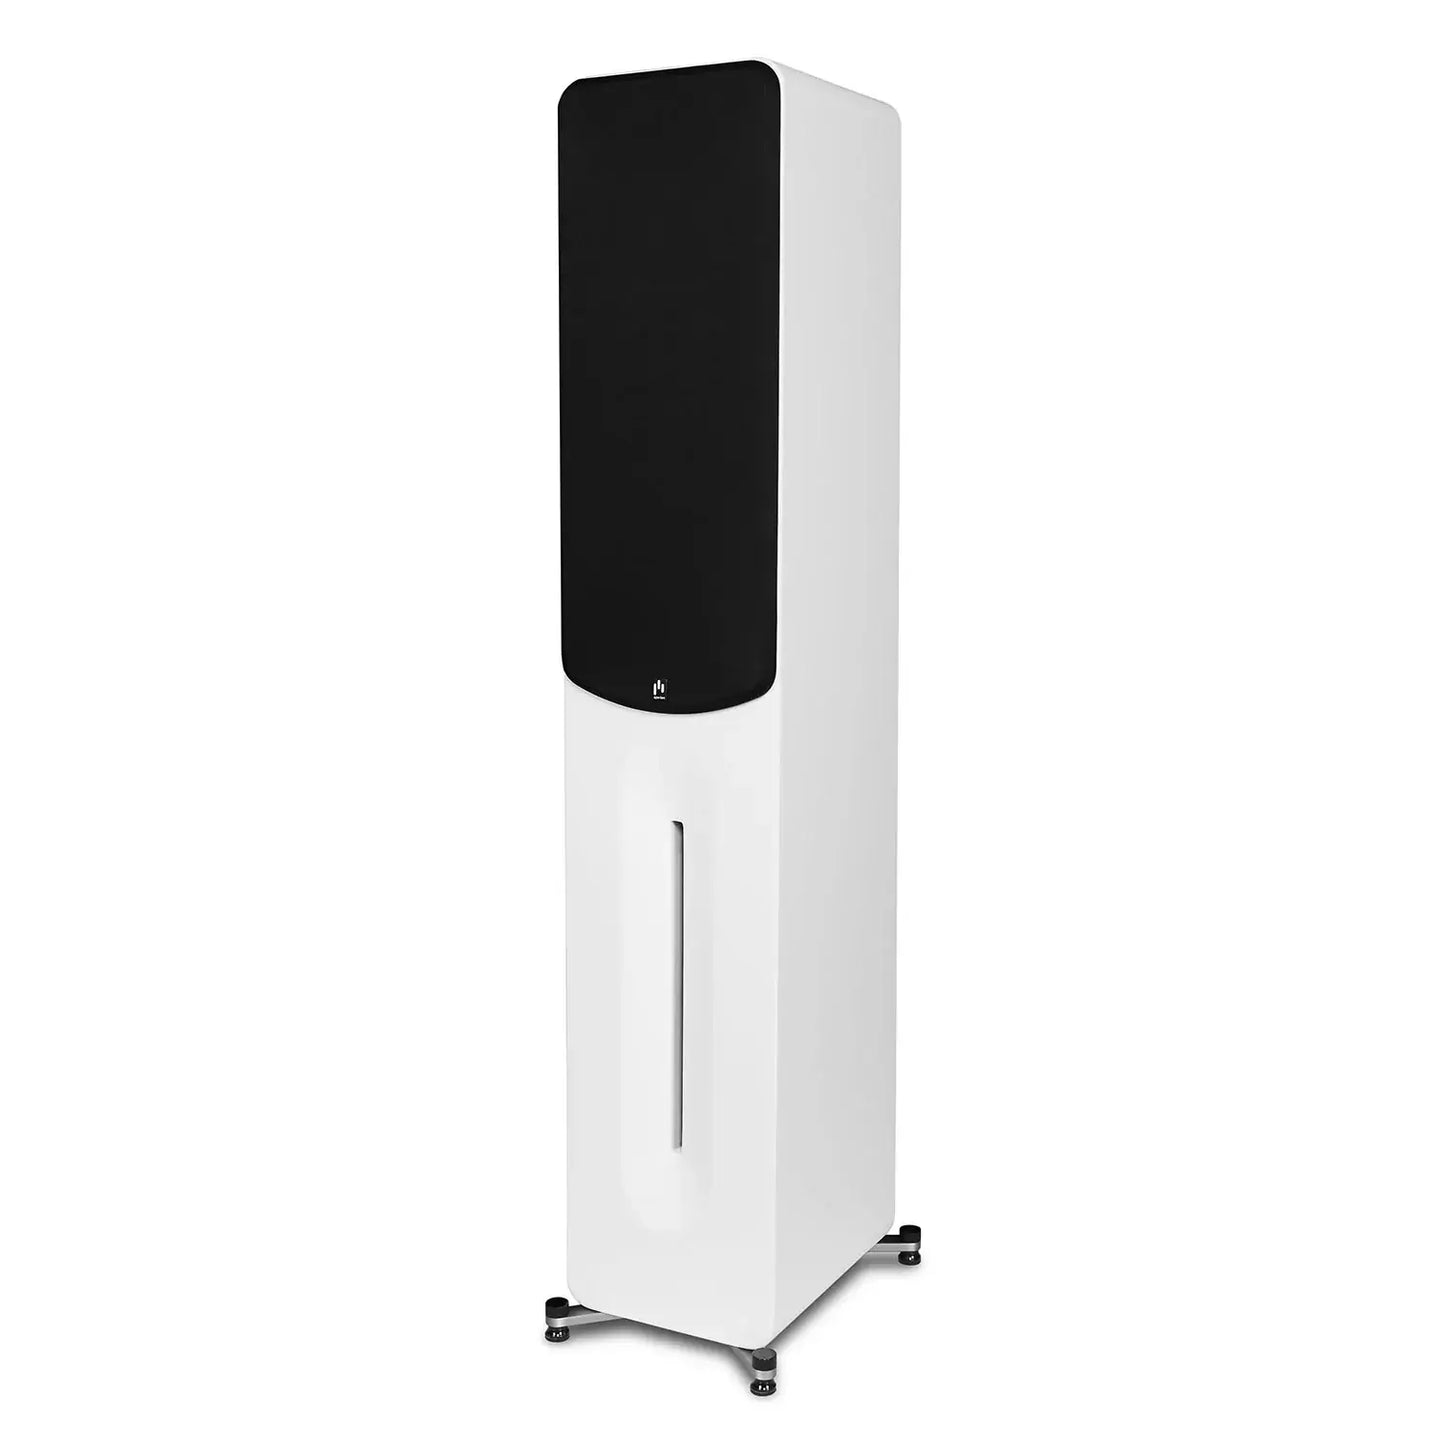 Aperion-Novus-N6T-Dual-6.5"-2-Way-Floorstanding-Tower-Speaker-White-With-Grille-On-aperionaudio